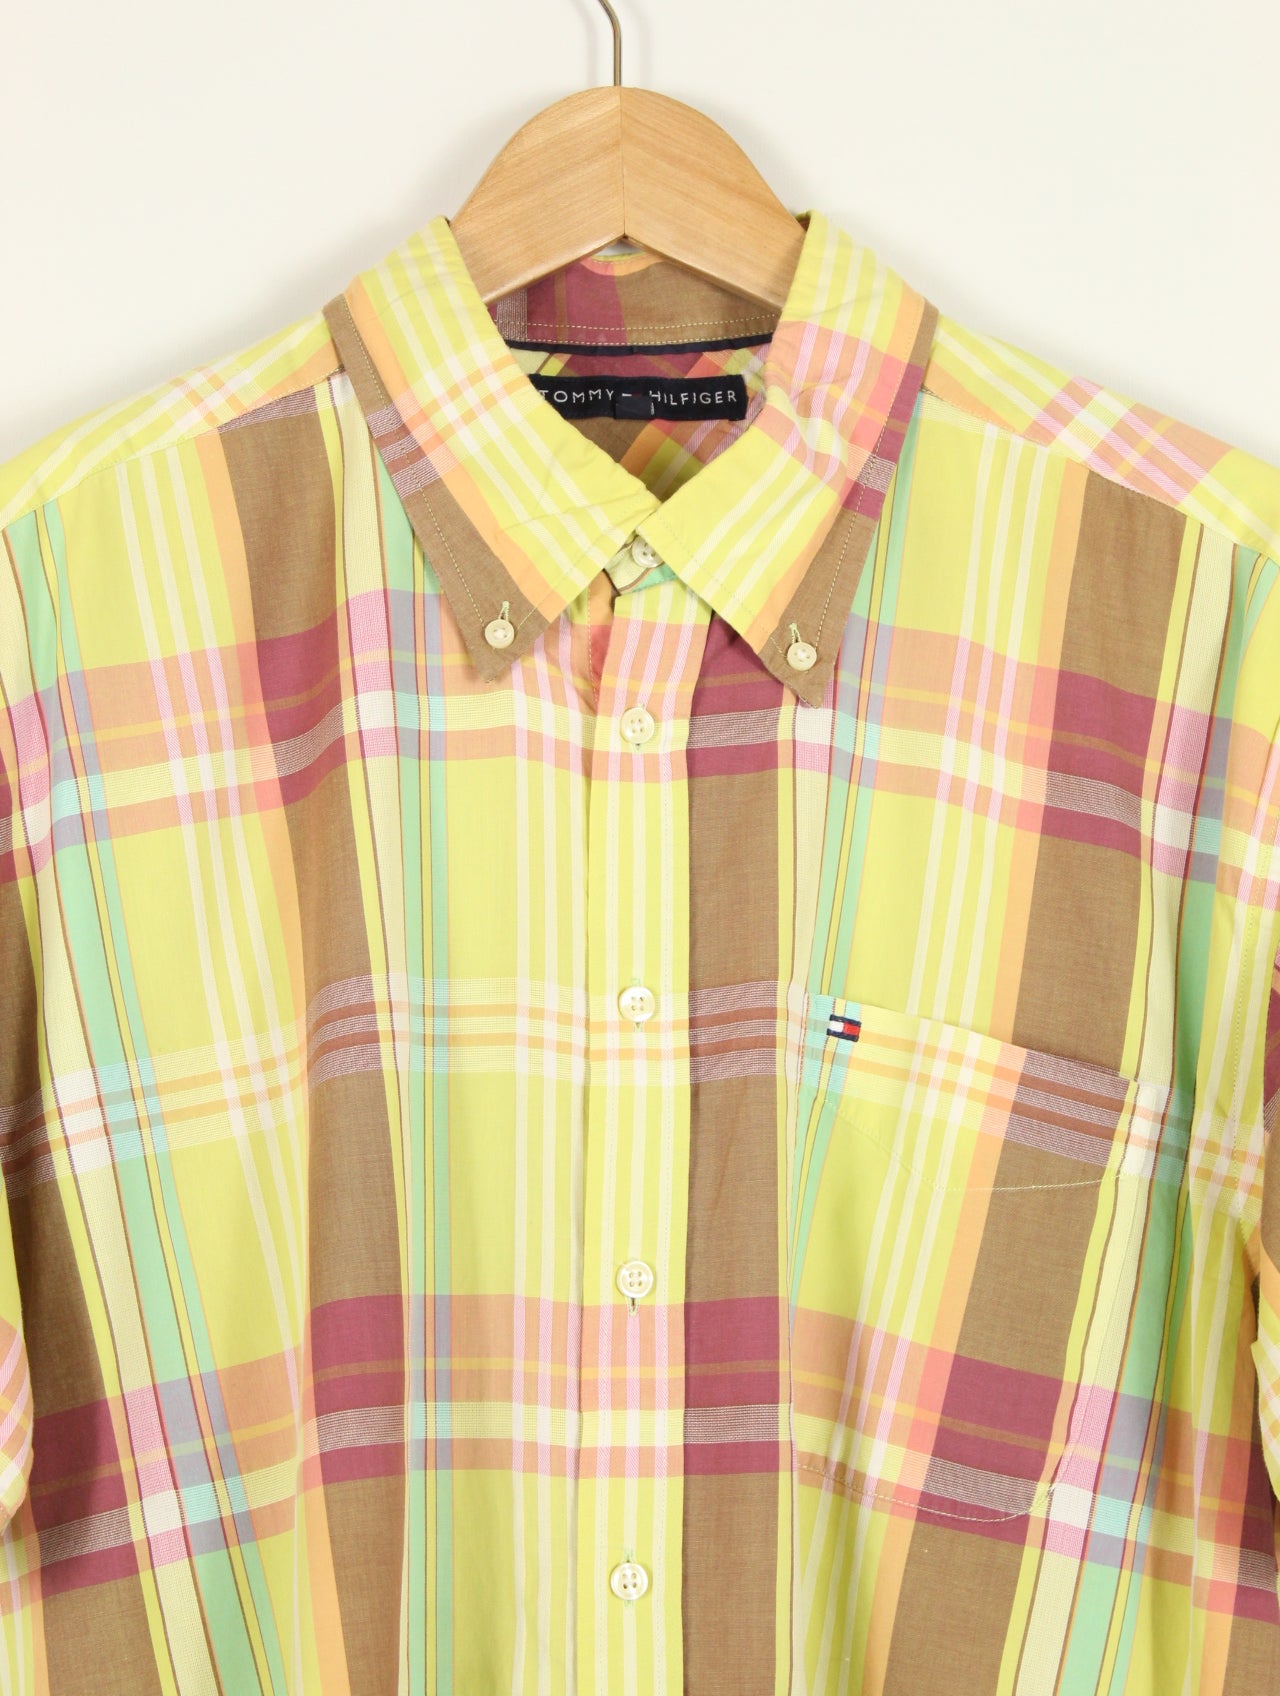 Short Sleeve Tommy Hilfiger Plaid Shirt (M/L)